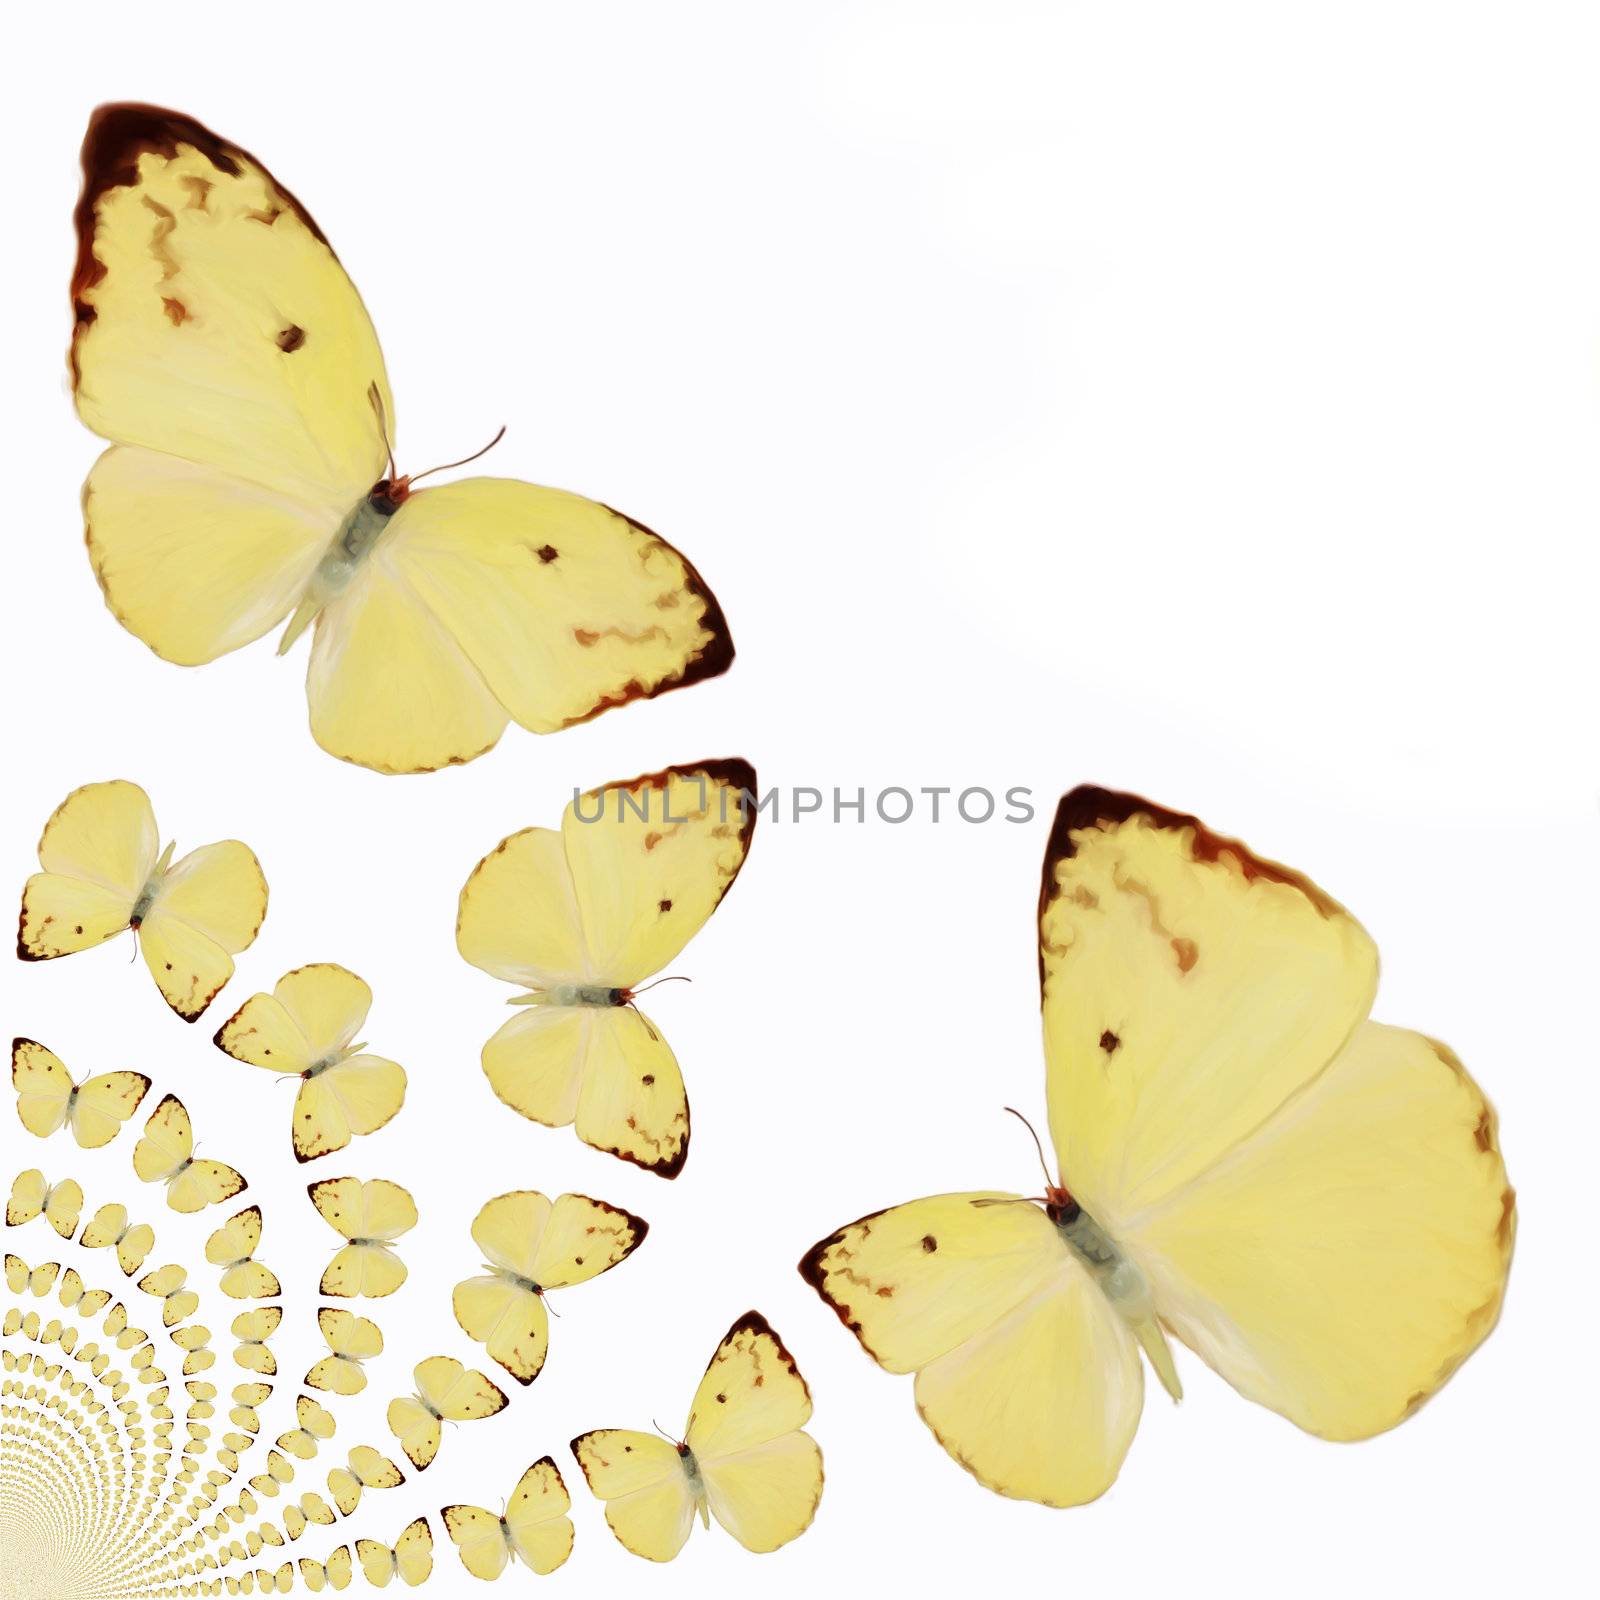 Kaleidoscopic Butterflies Illustration by 3quarks